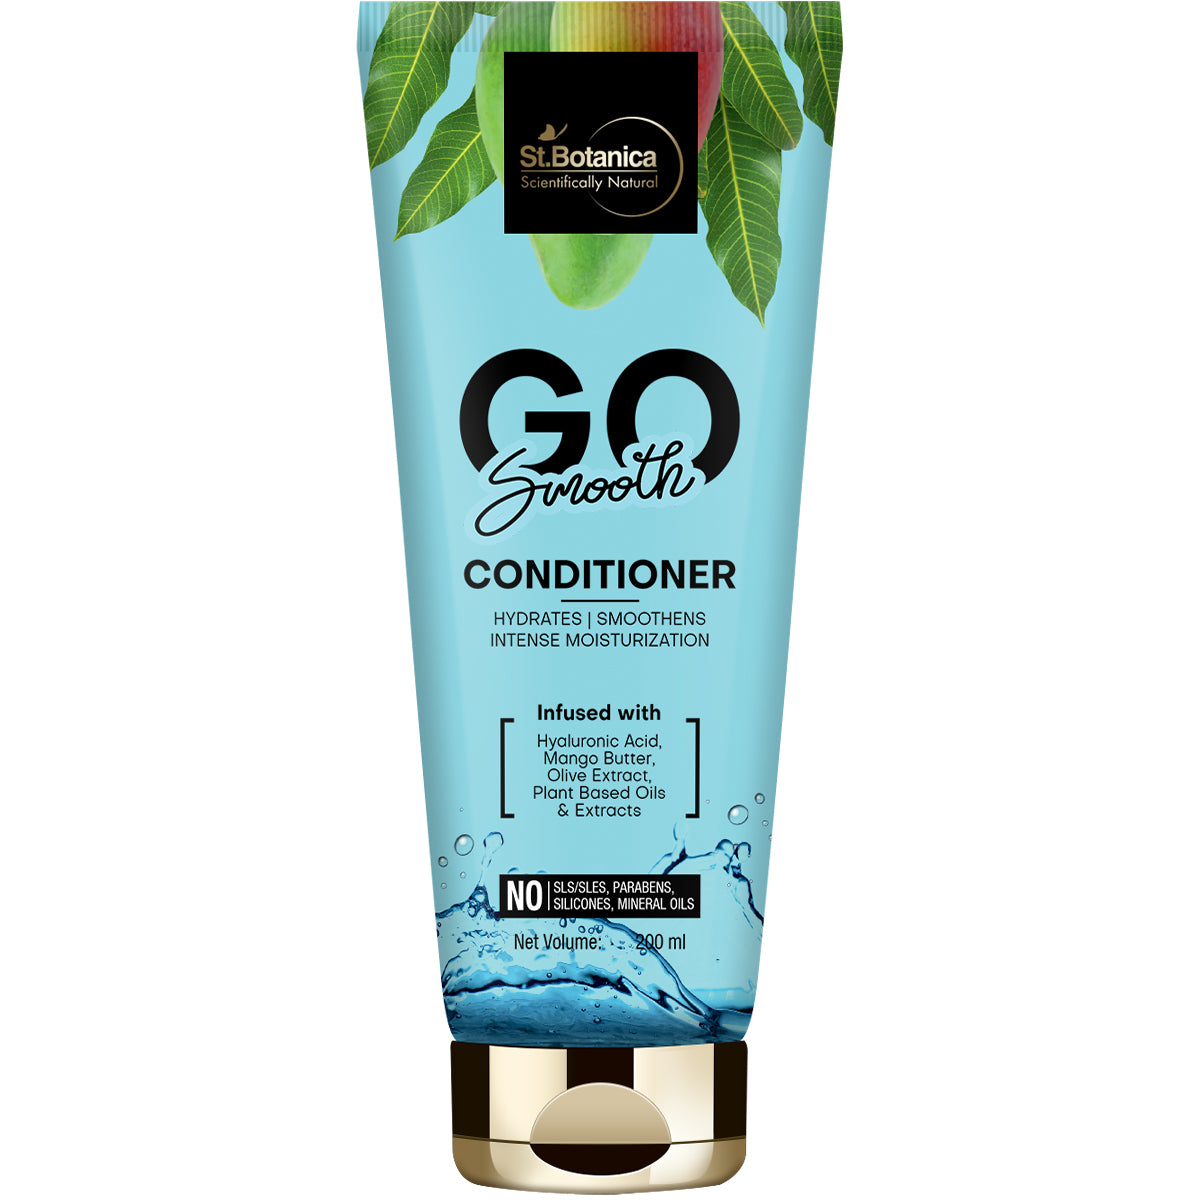 St.Botanica Go Smooth Shampoo + Conditioner, 200ml Each, No SLS/Sulphate, Paraben, Silicones, Colors